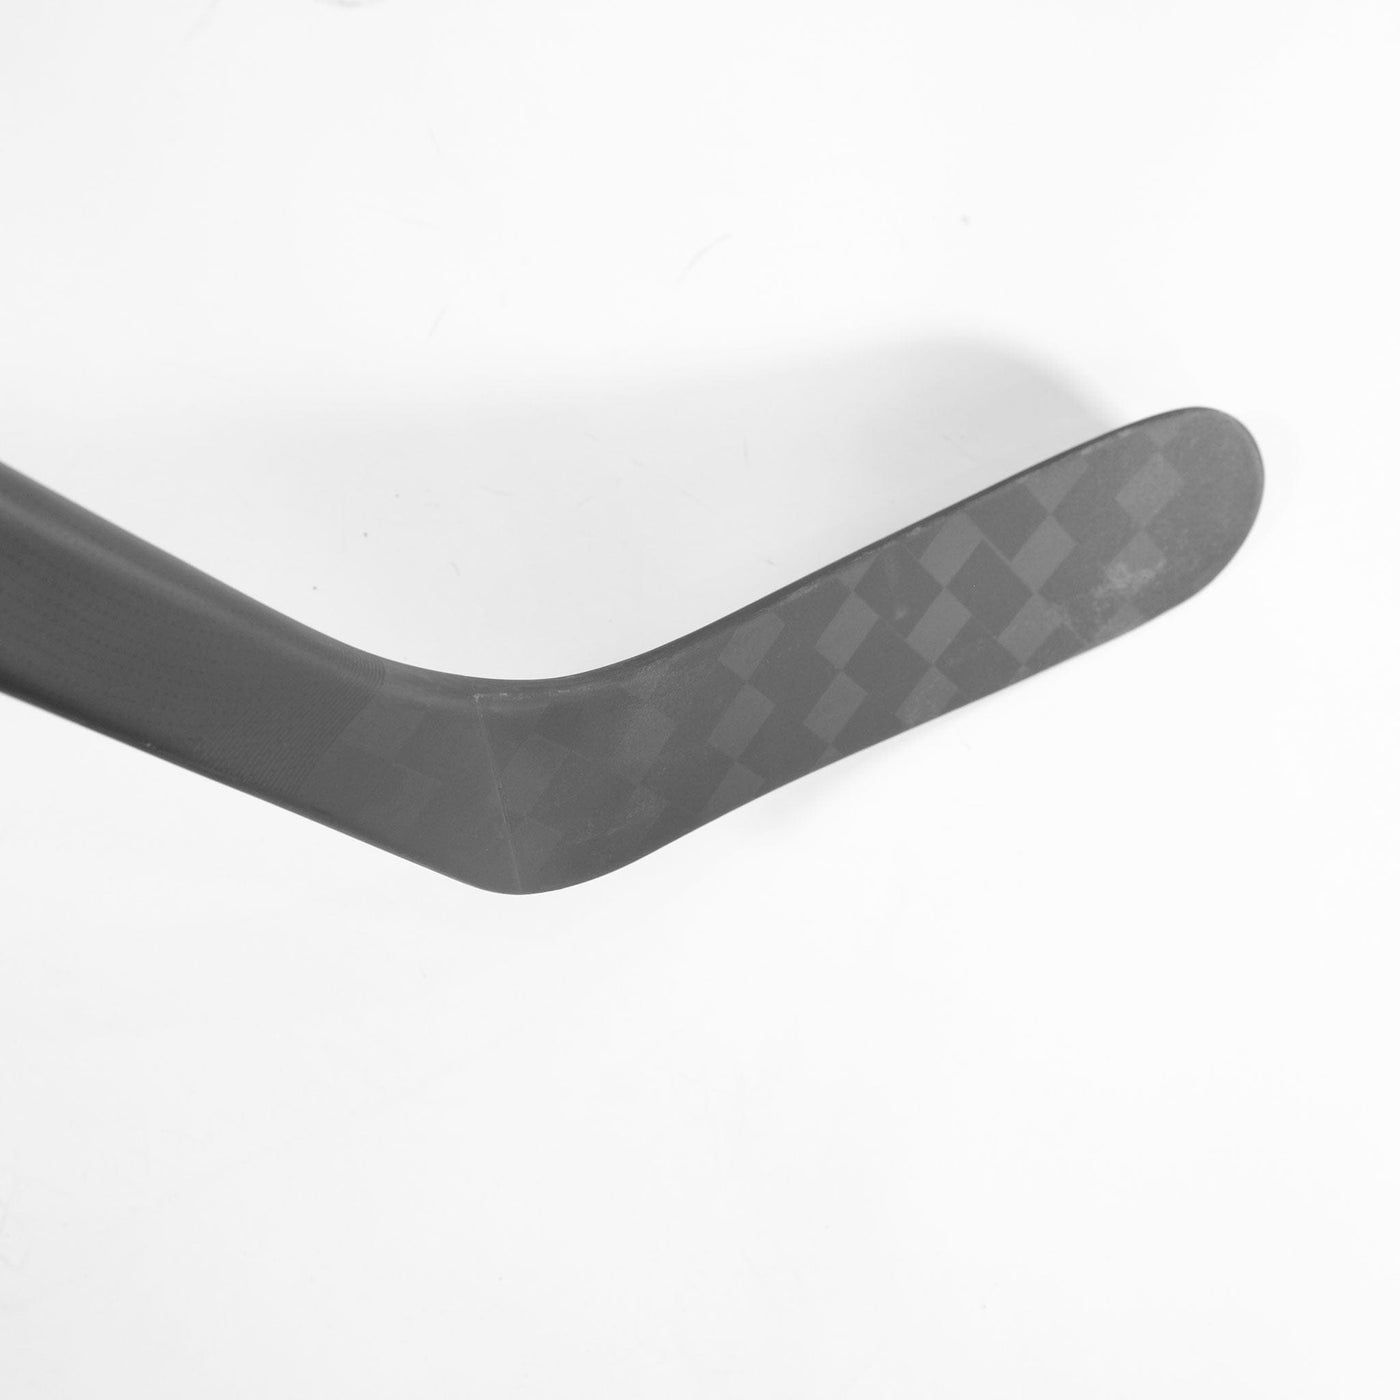 CCM RIBCOR Trigger 7 Pro Senior Hockey Stick - The Hockey Shop Source For Sports